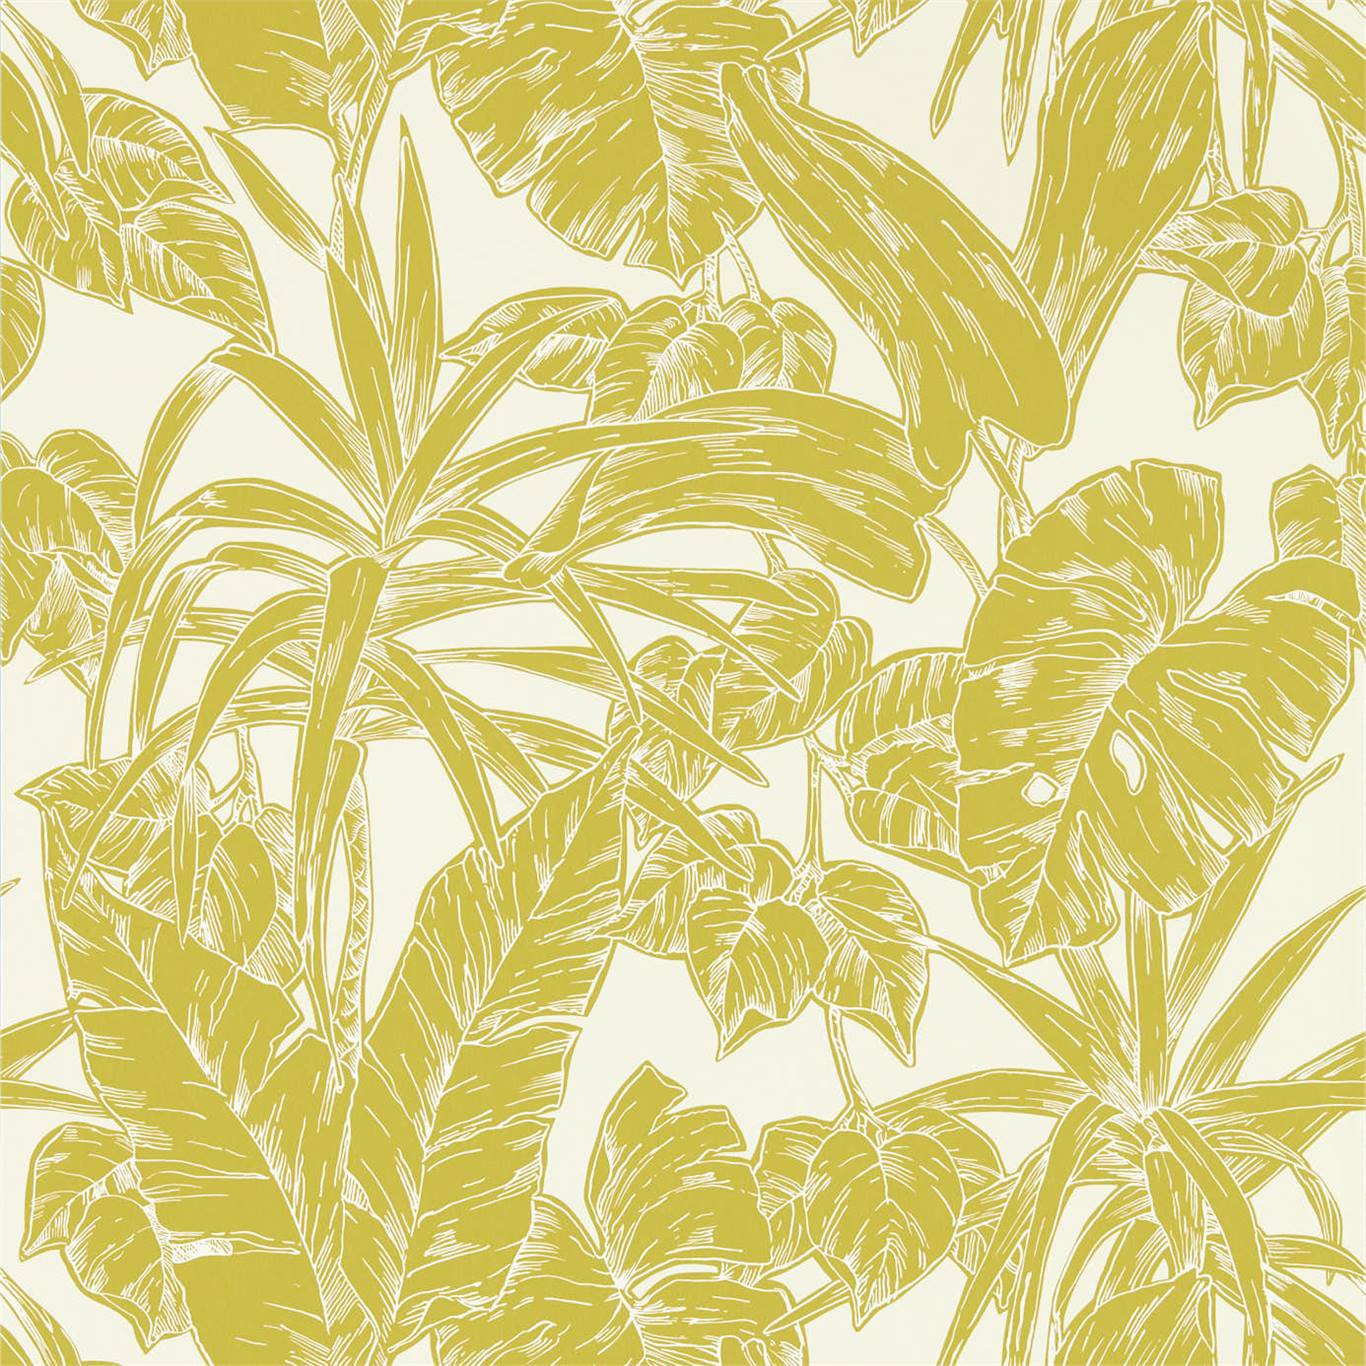 Parlour Palm Wallpaper by Scion